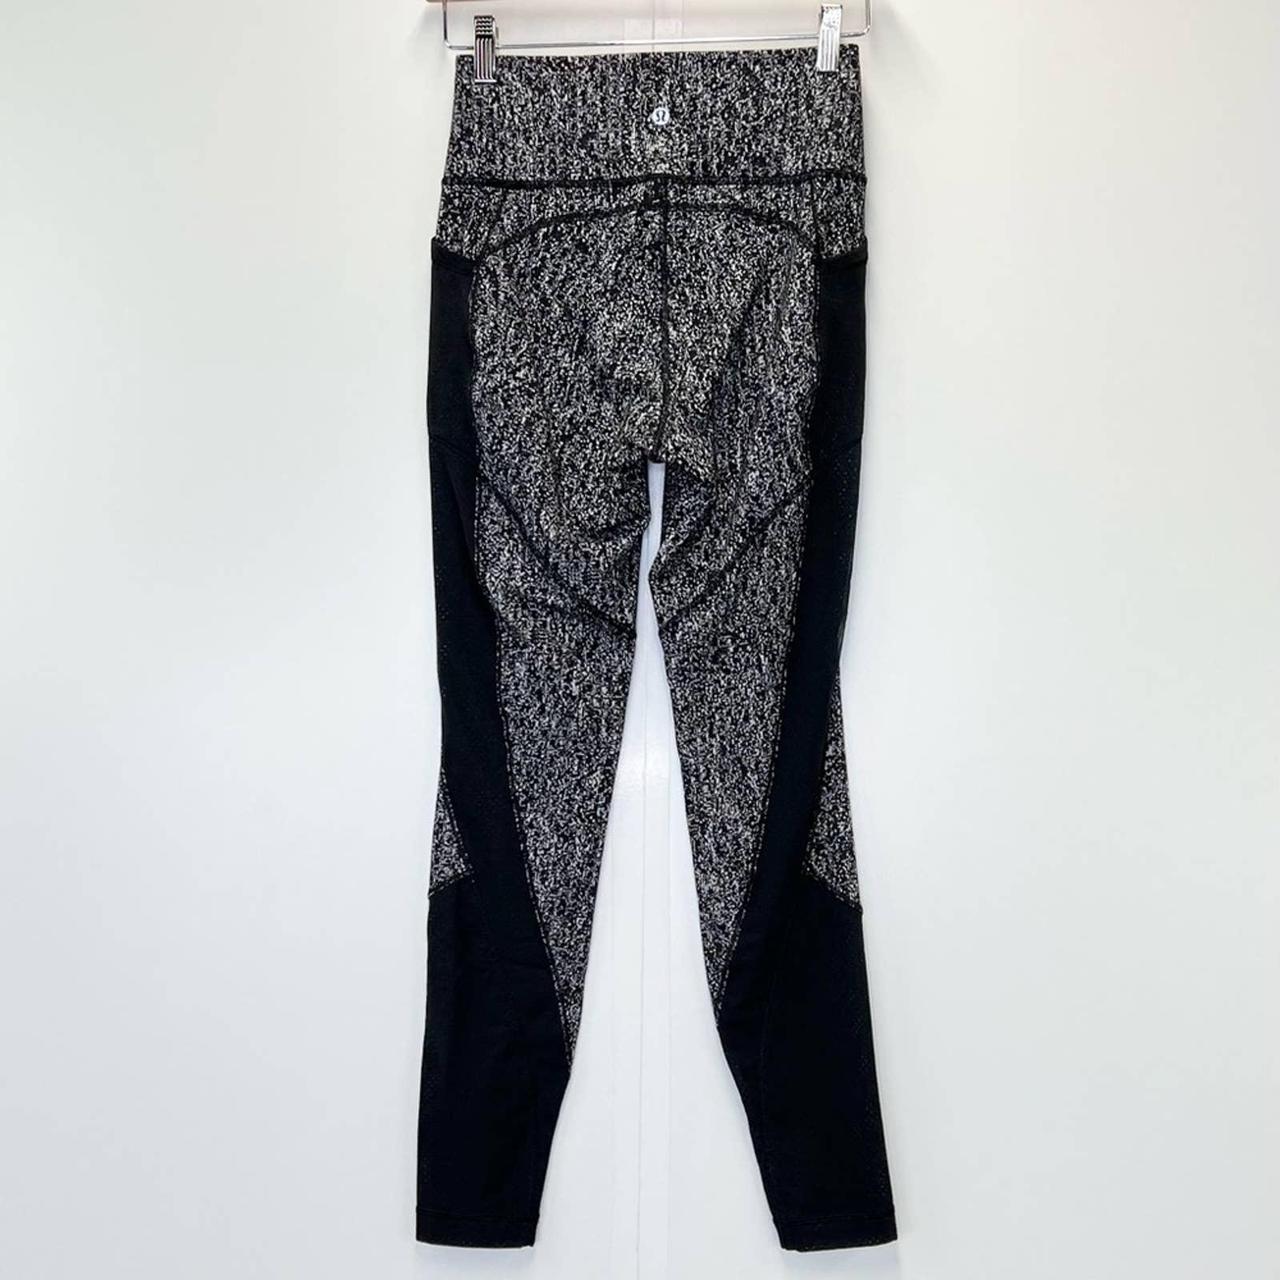 Lululemon Black & White speckled tights with mesh side pockets